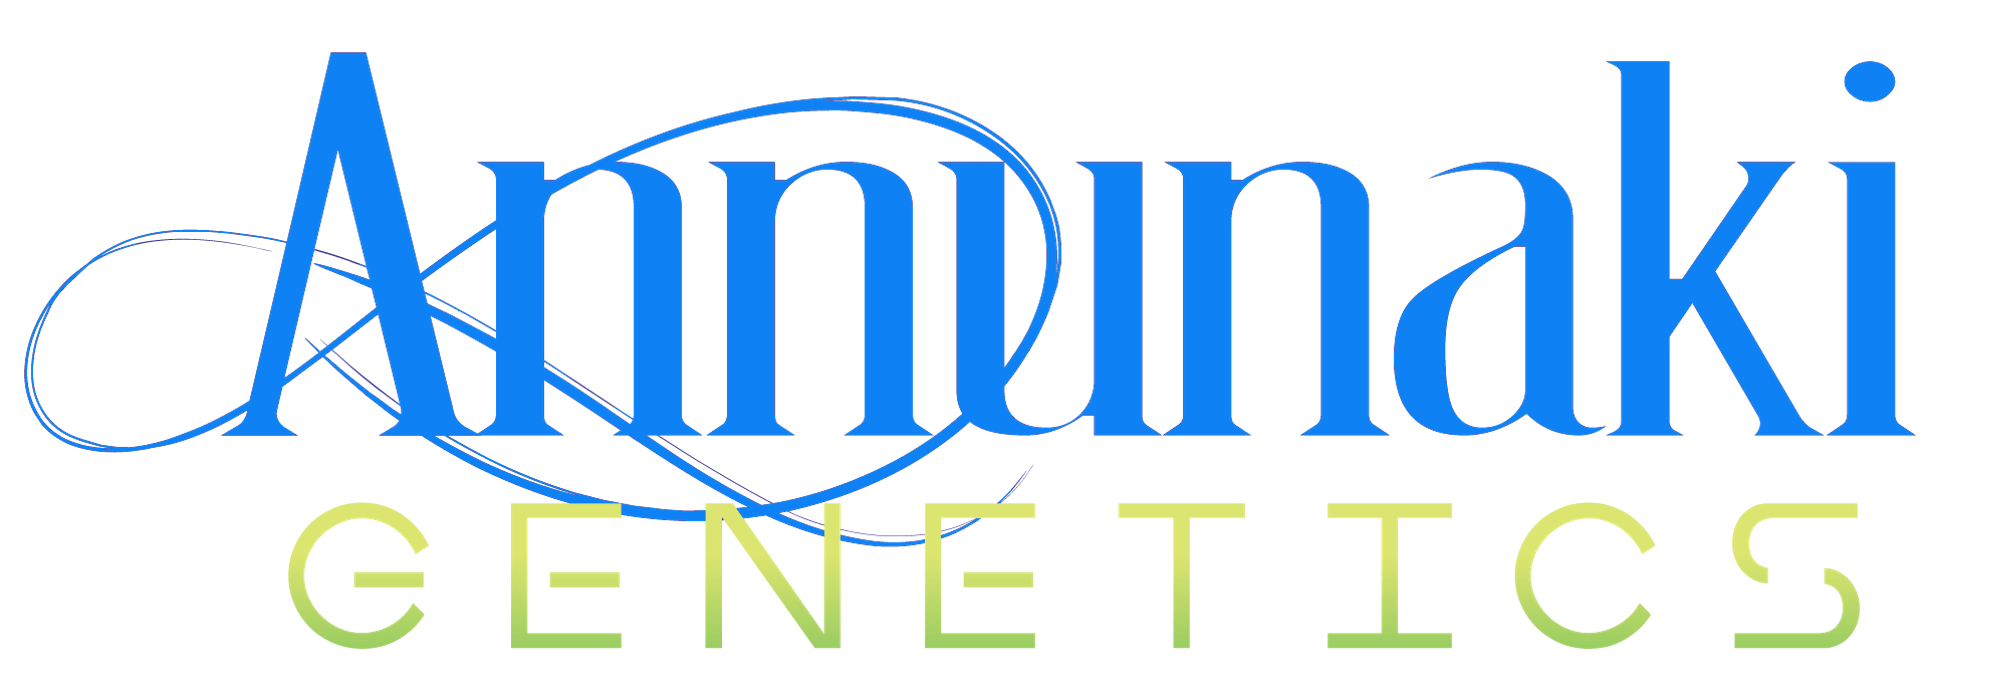 Annunaki Genetics logo